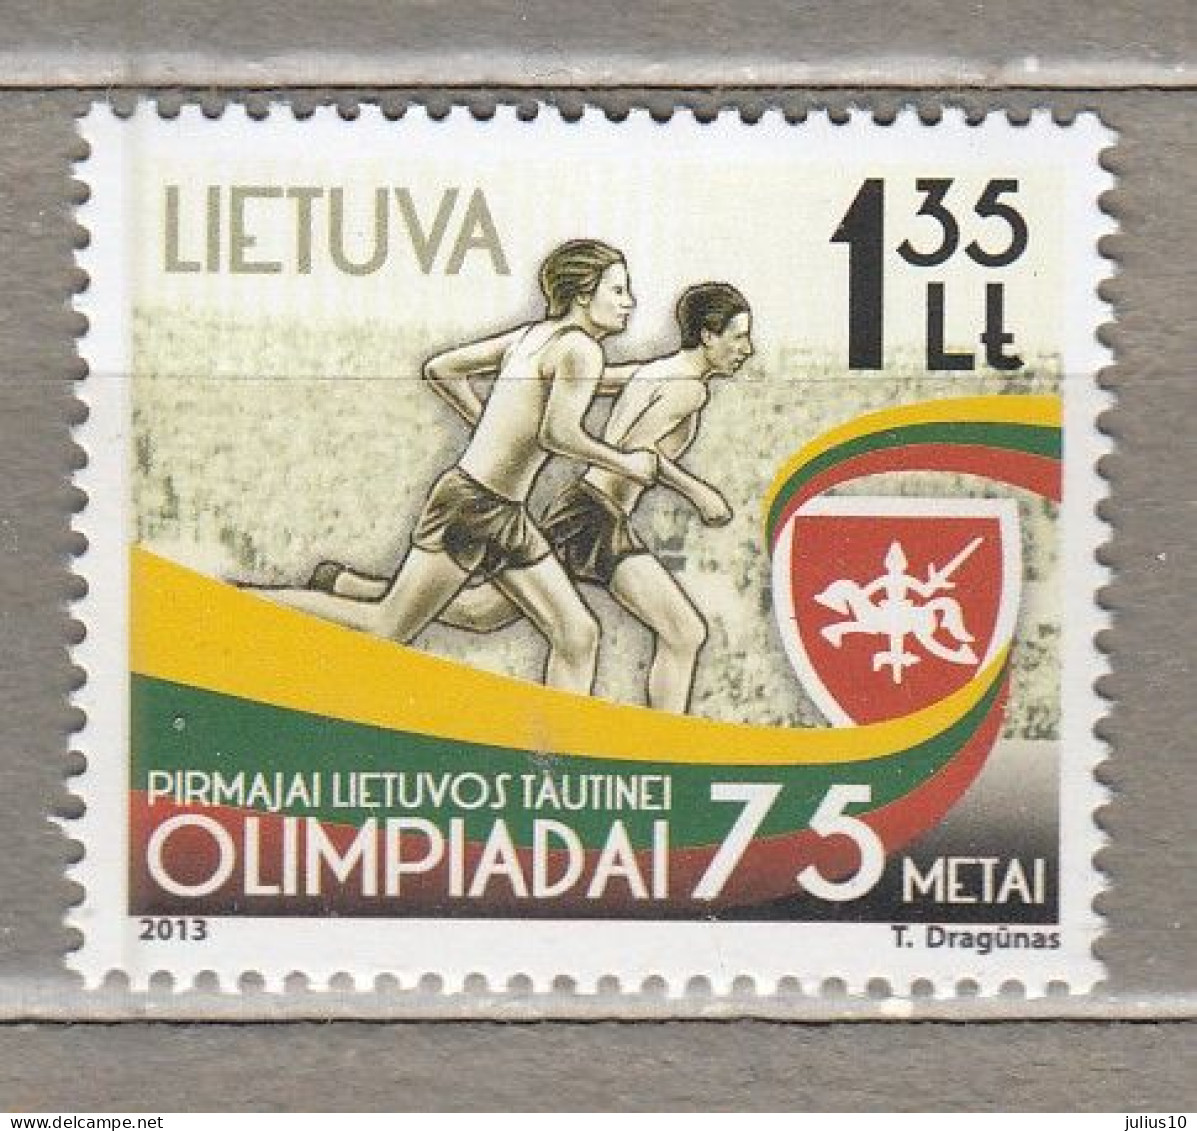 LITHUANIA 2013 National Olympic Games  MNH(**) Mi 1139 #Lt838 - Lithuania